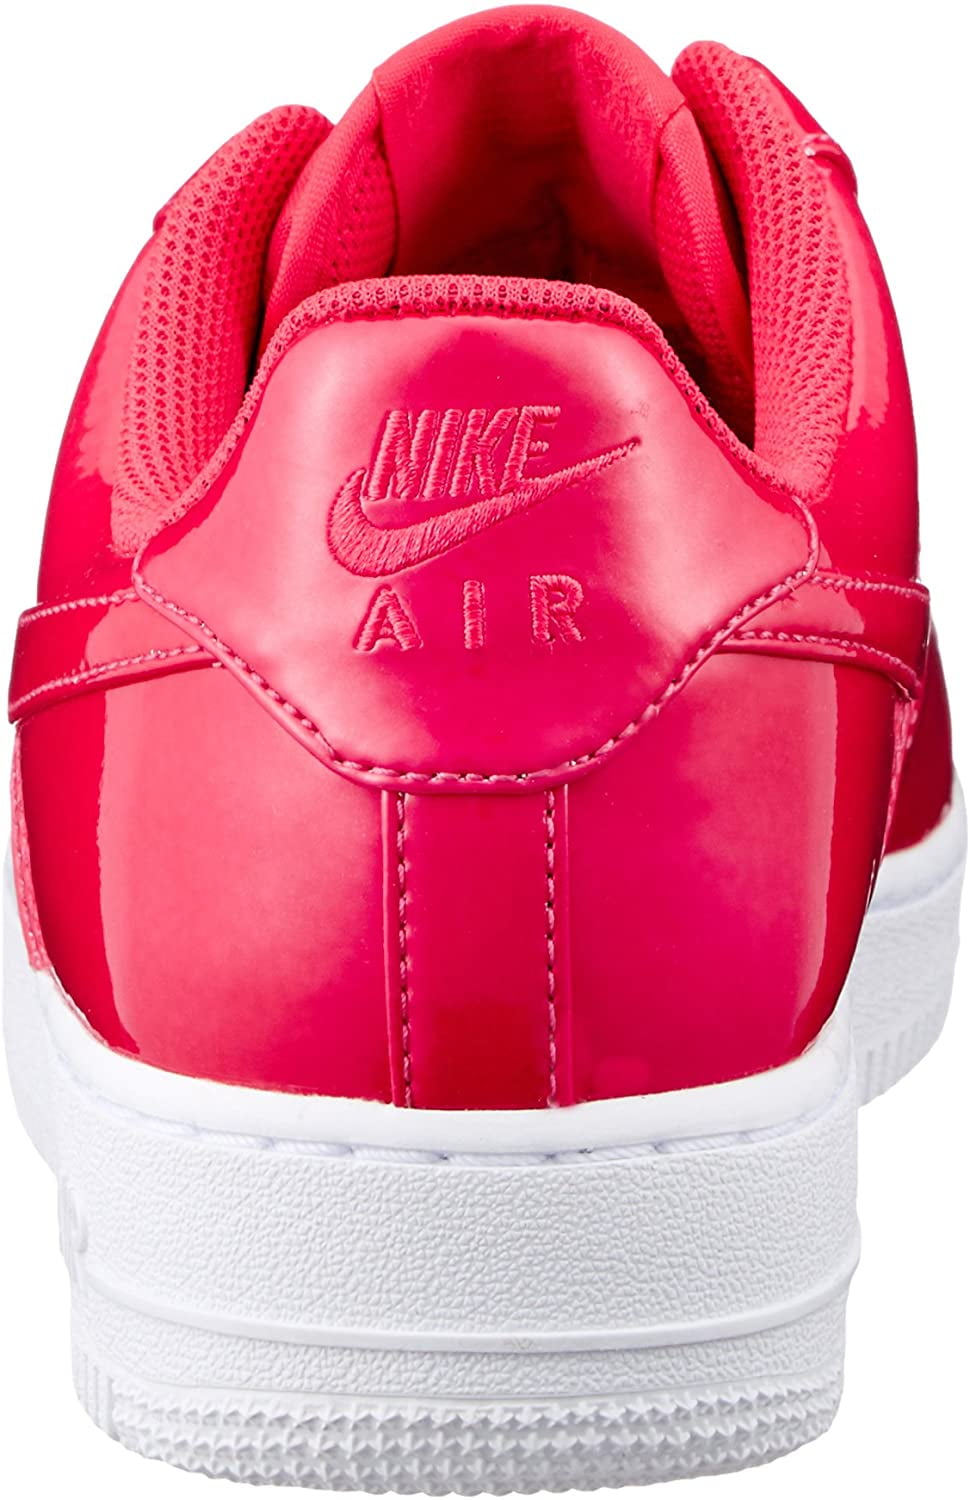 Nike Air Force 1 07 LV8 UV Red 13